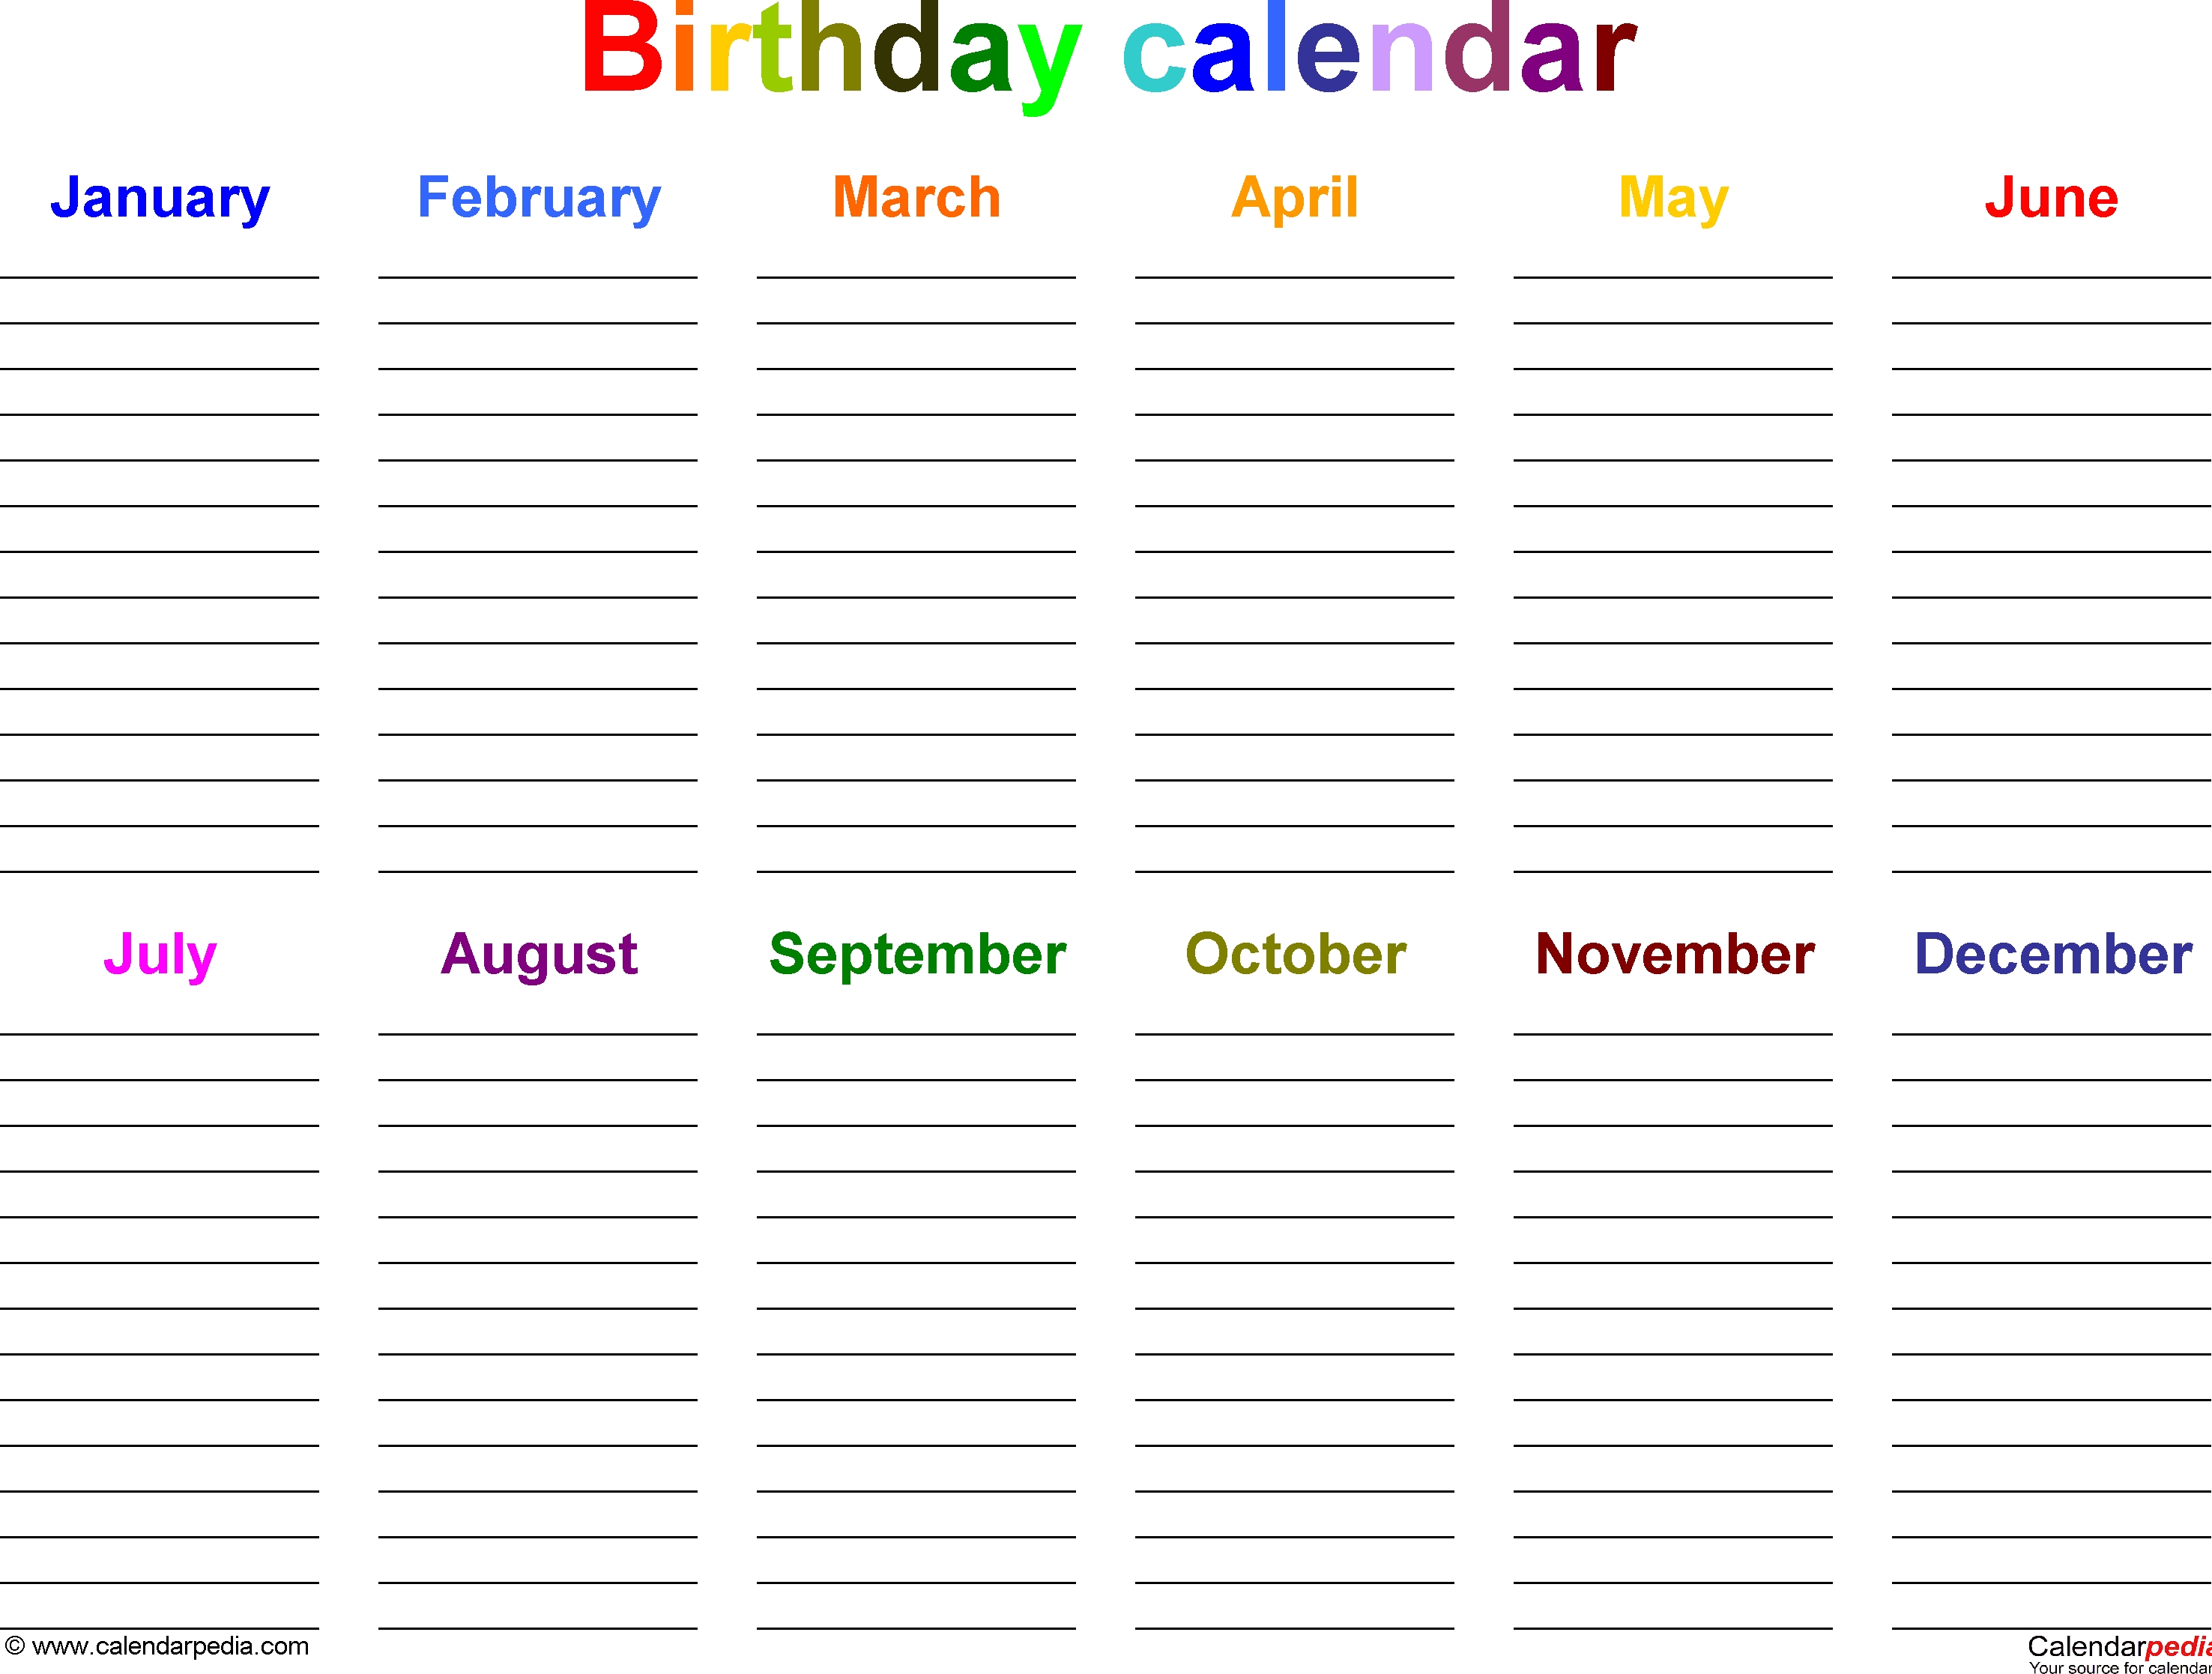 Excel Template For Birthday Calendar In Color (Landscape Orientation regarding Free Printable Birthday Calendar Yearly